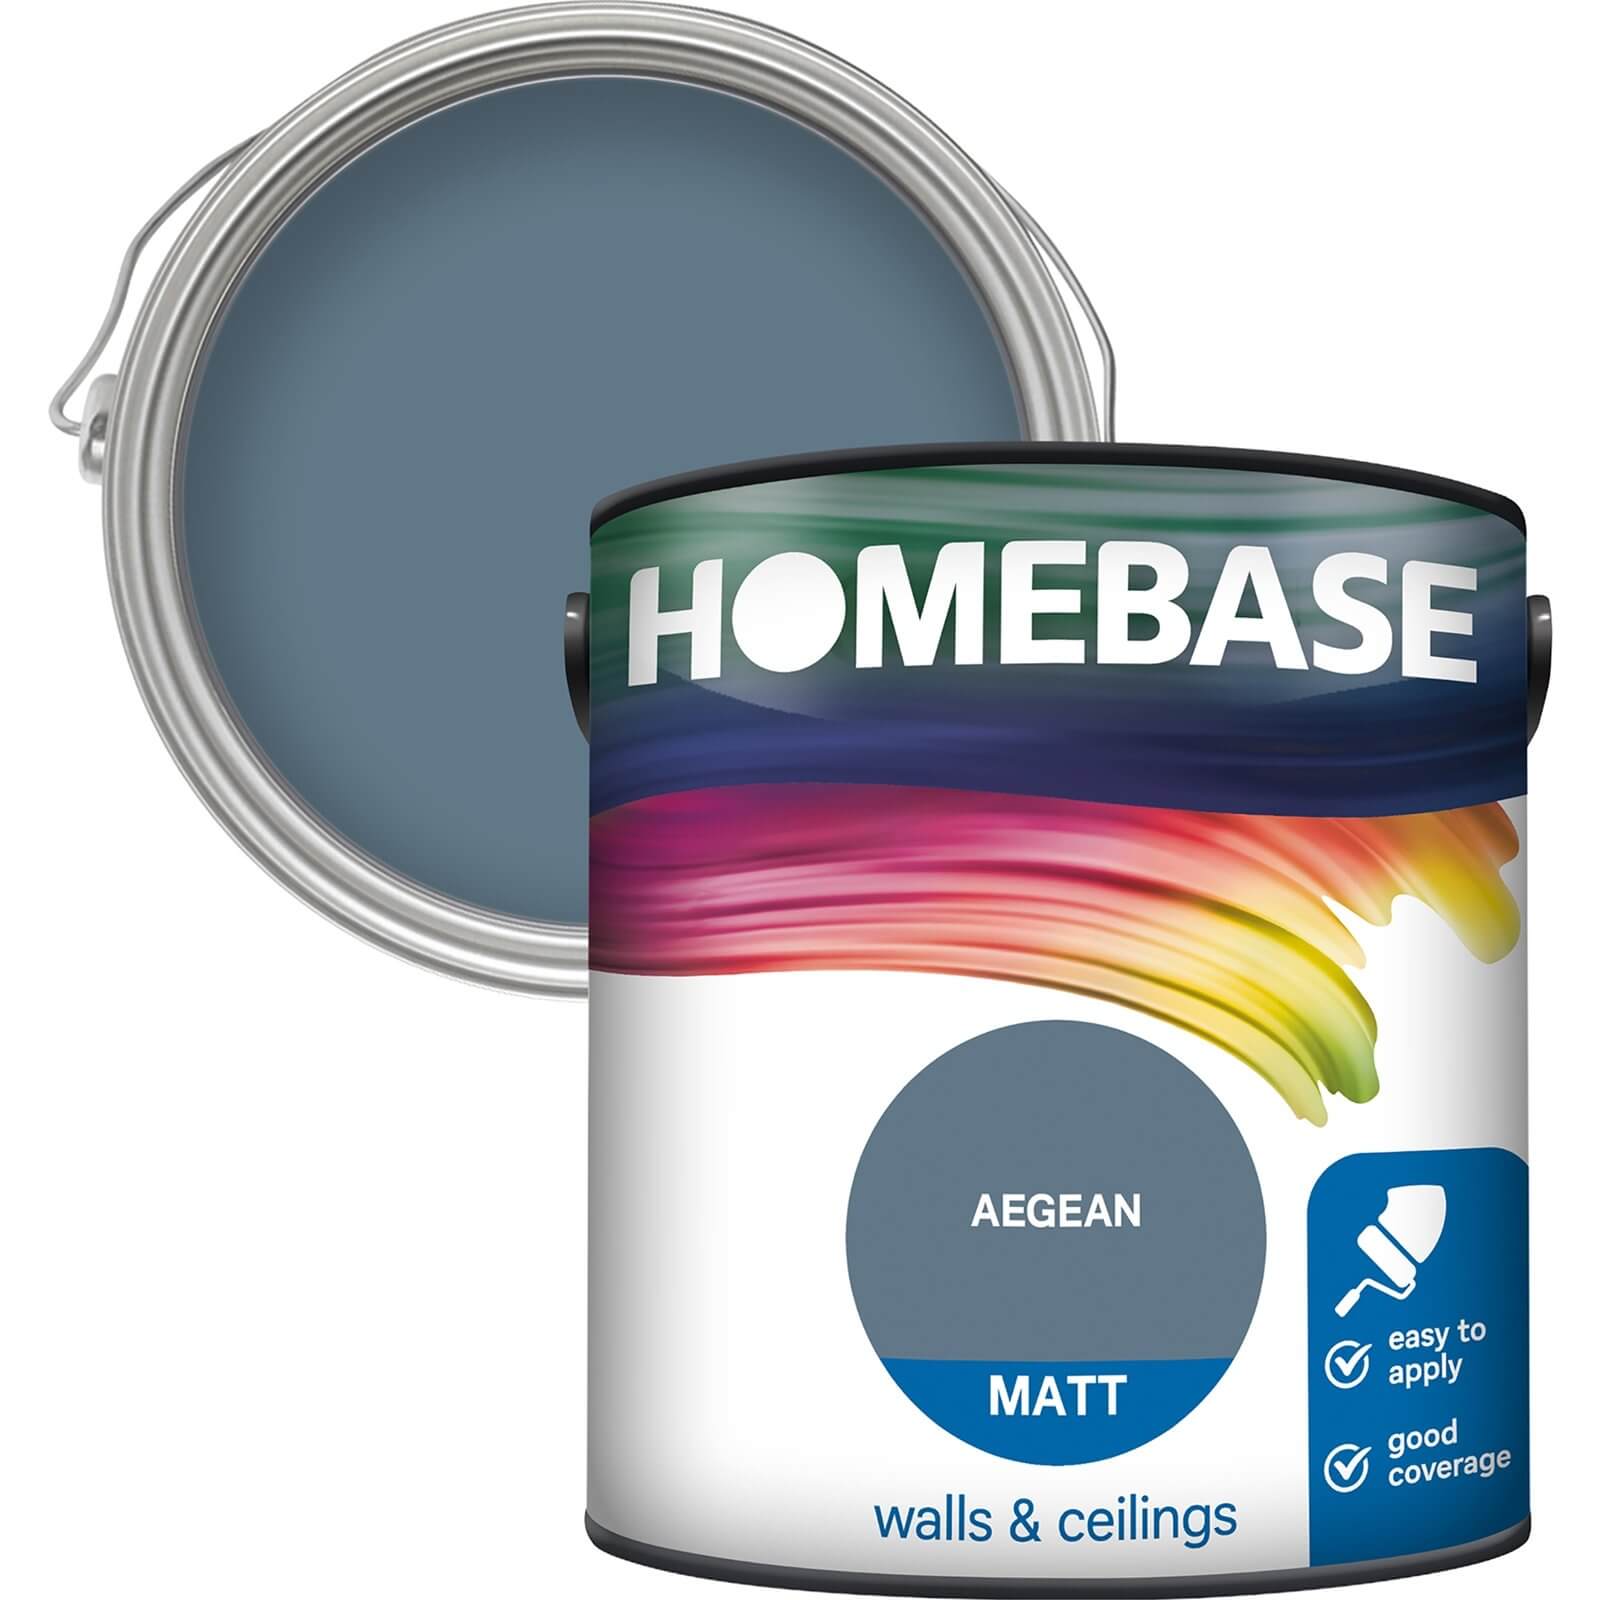 Homebase Matt Emulsion Paint Aegean - 2.5L